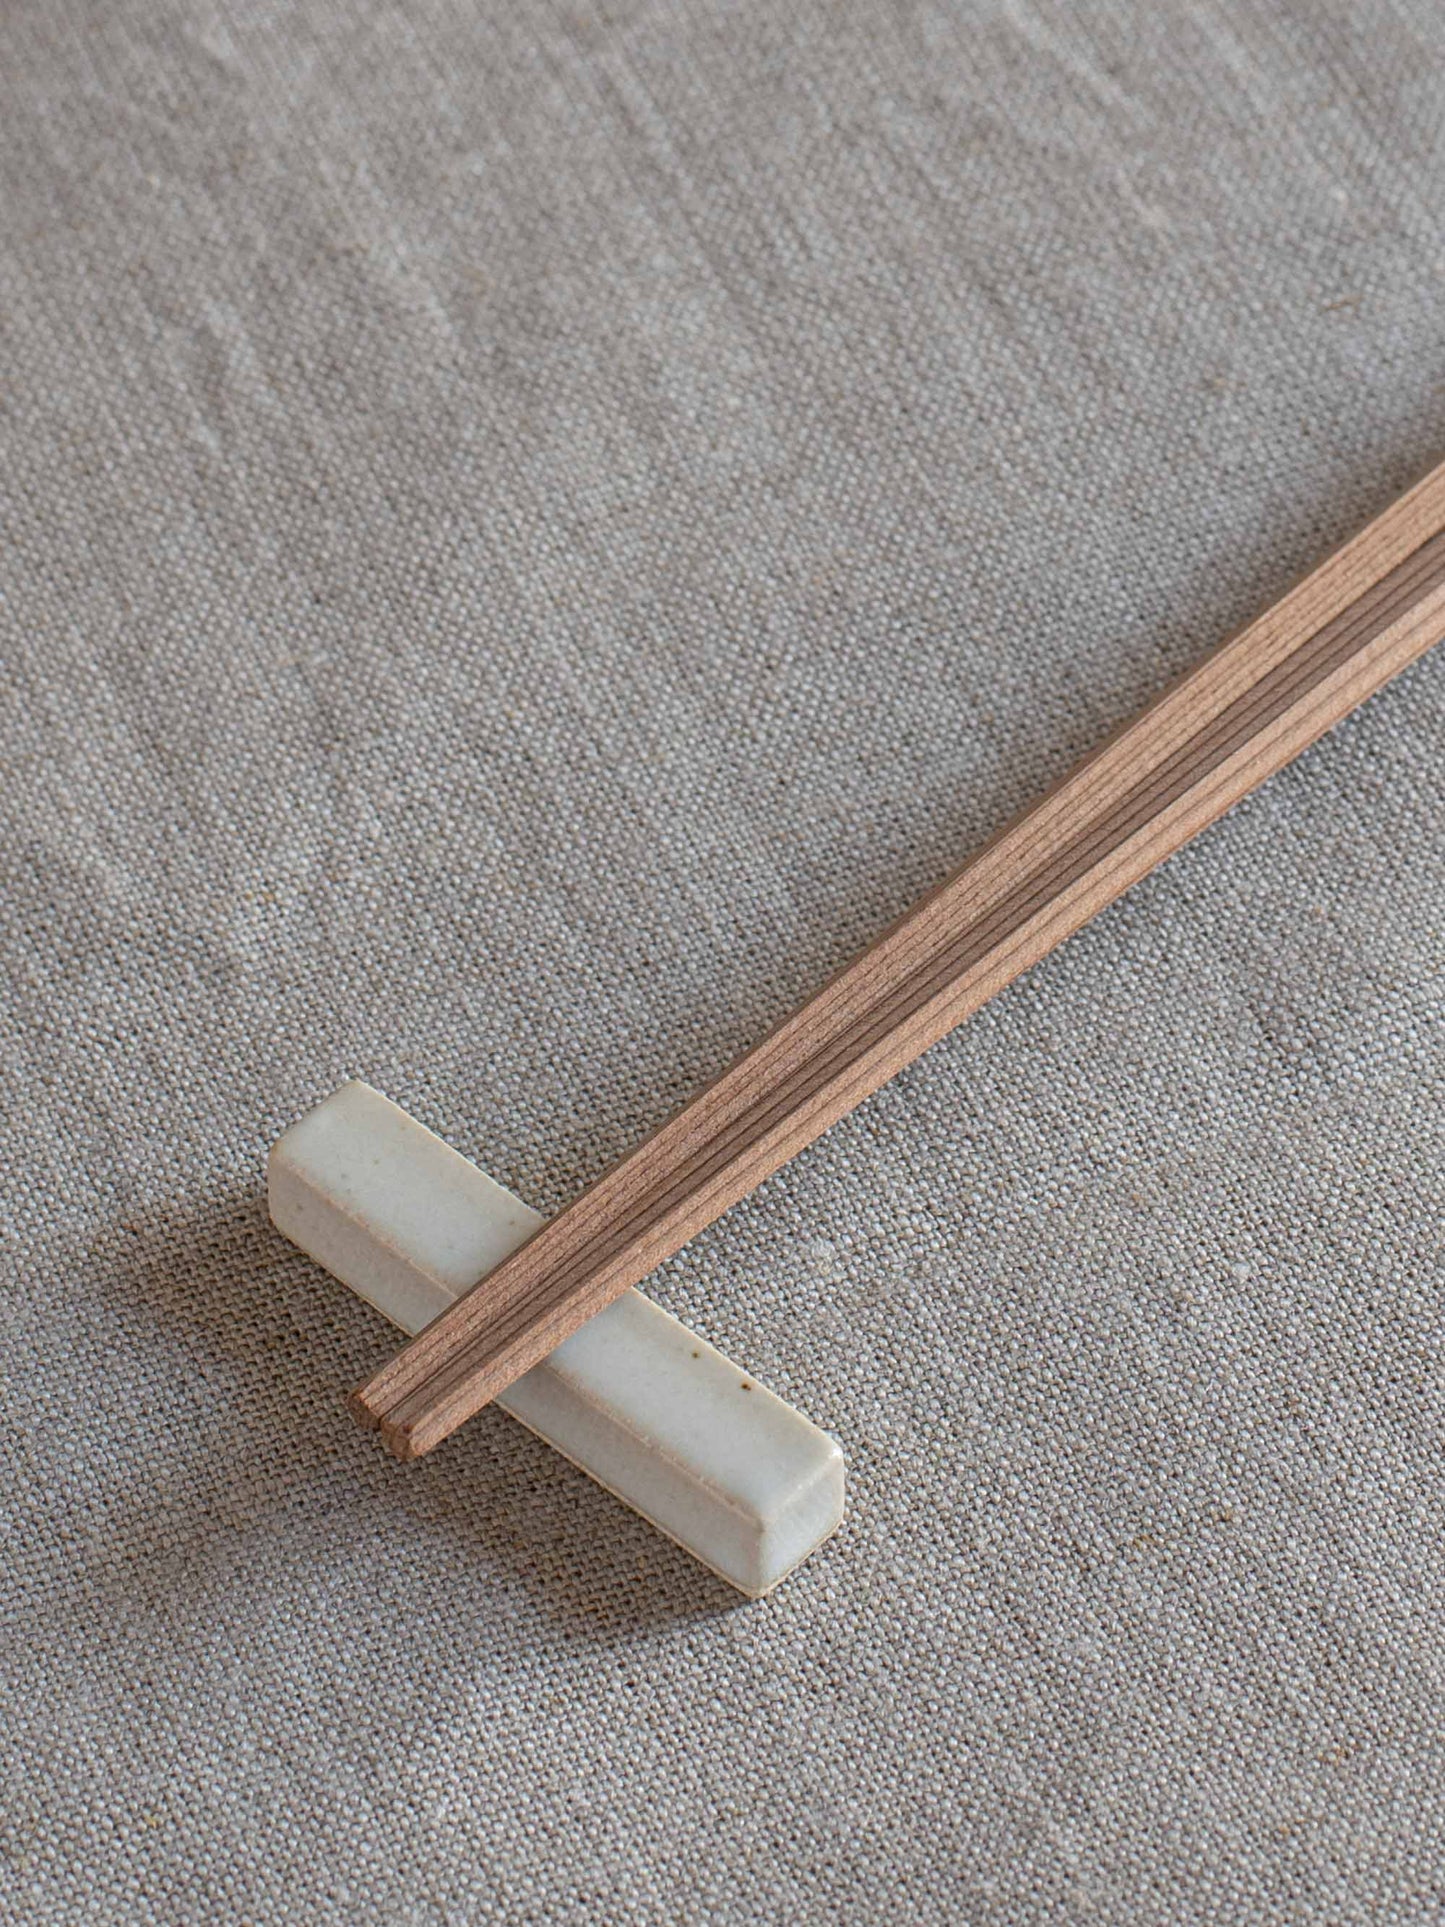 Pentagon Chopsticks